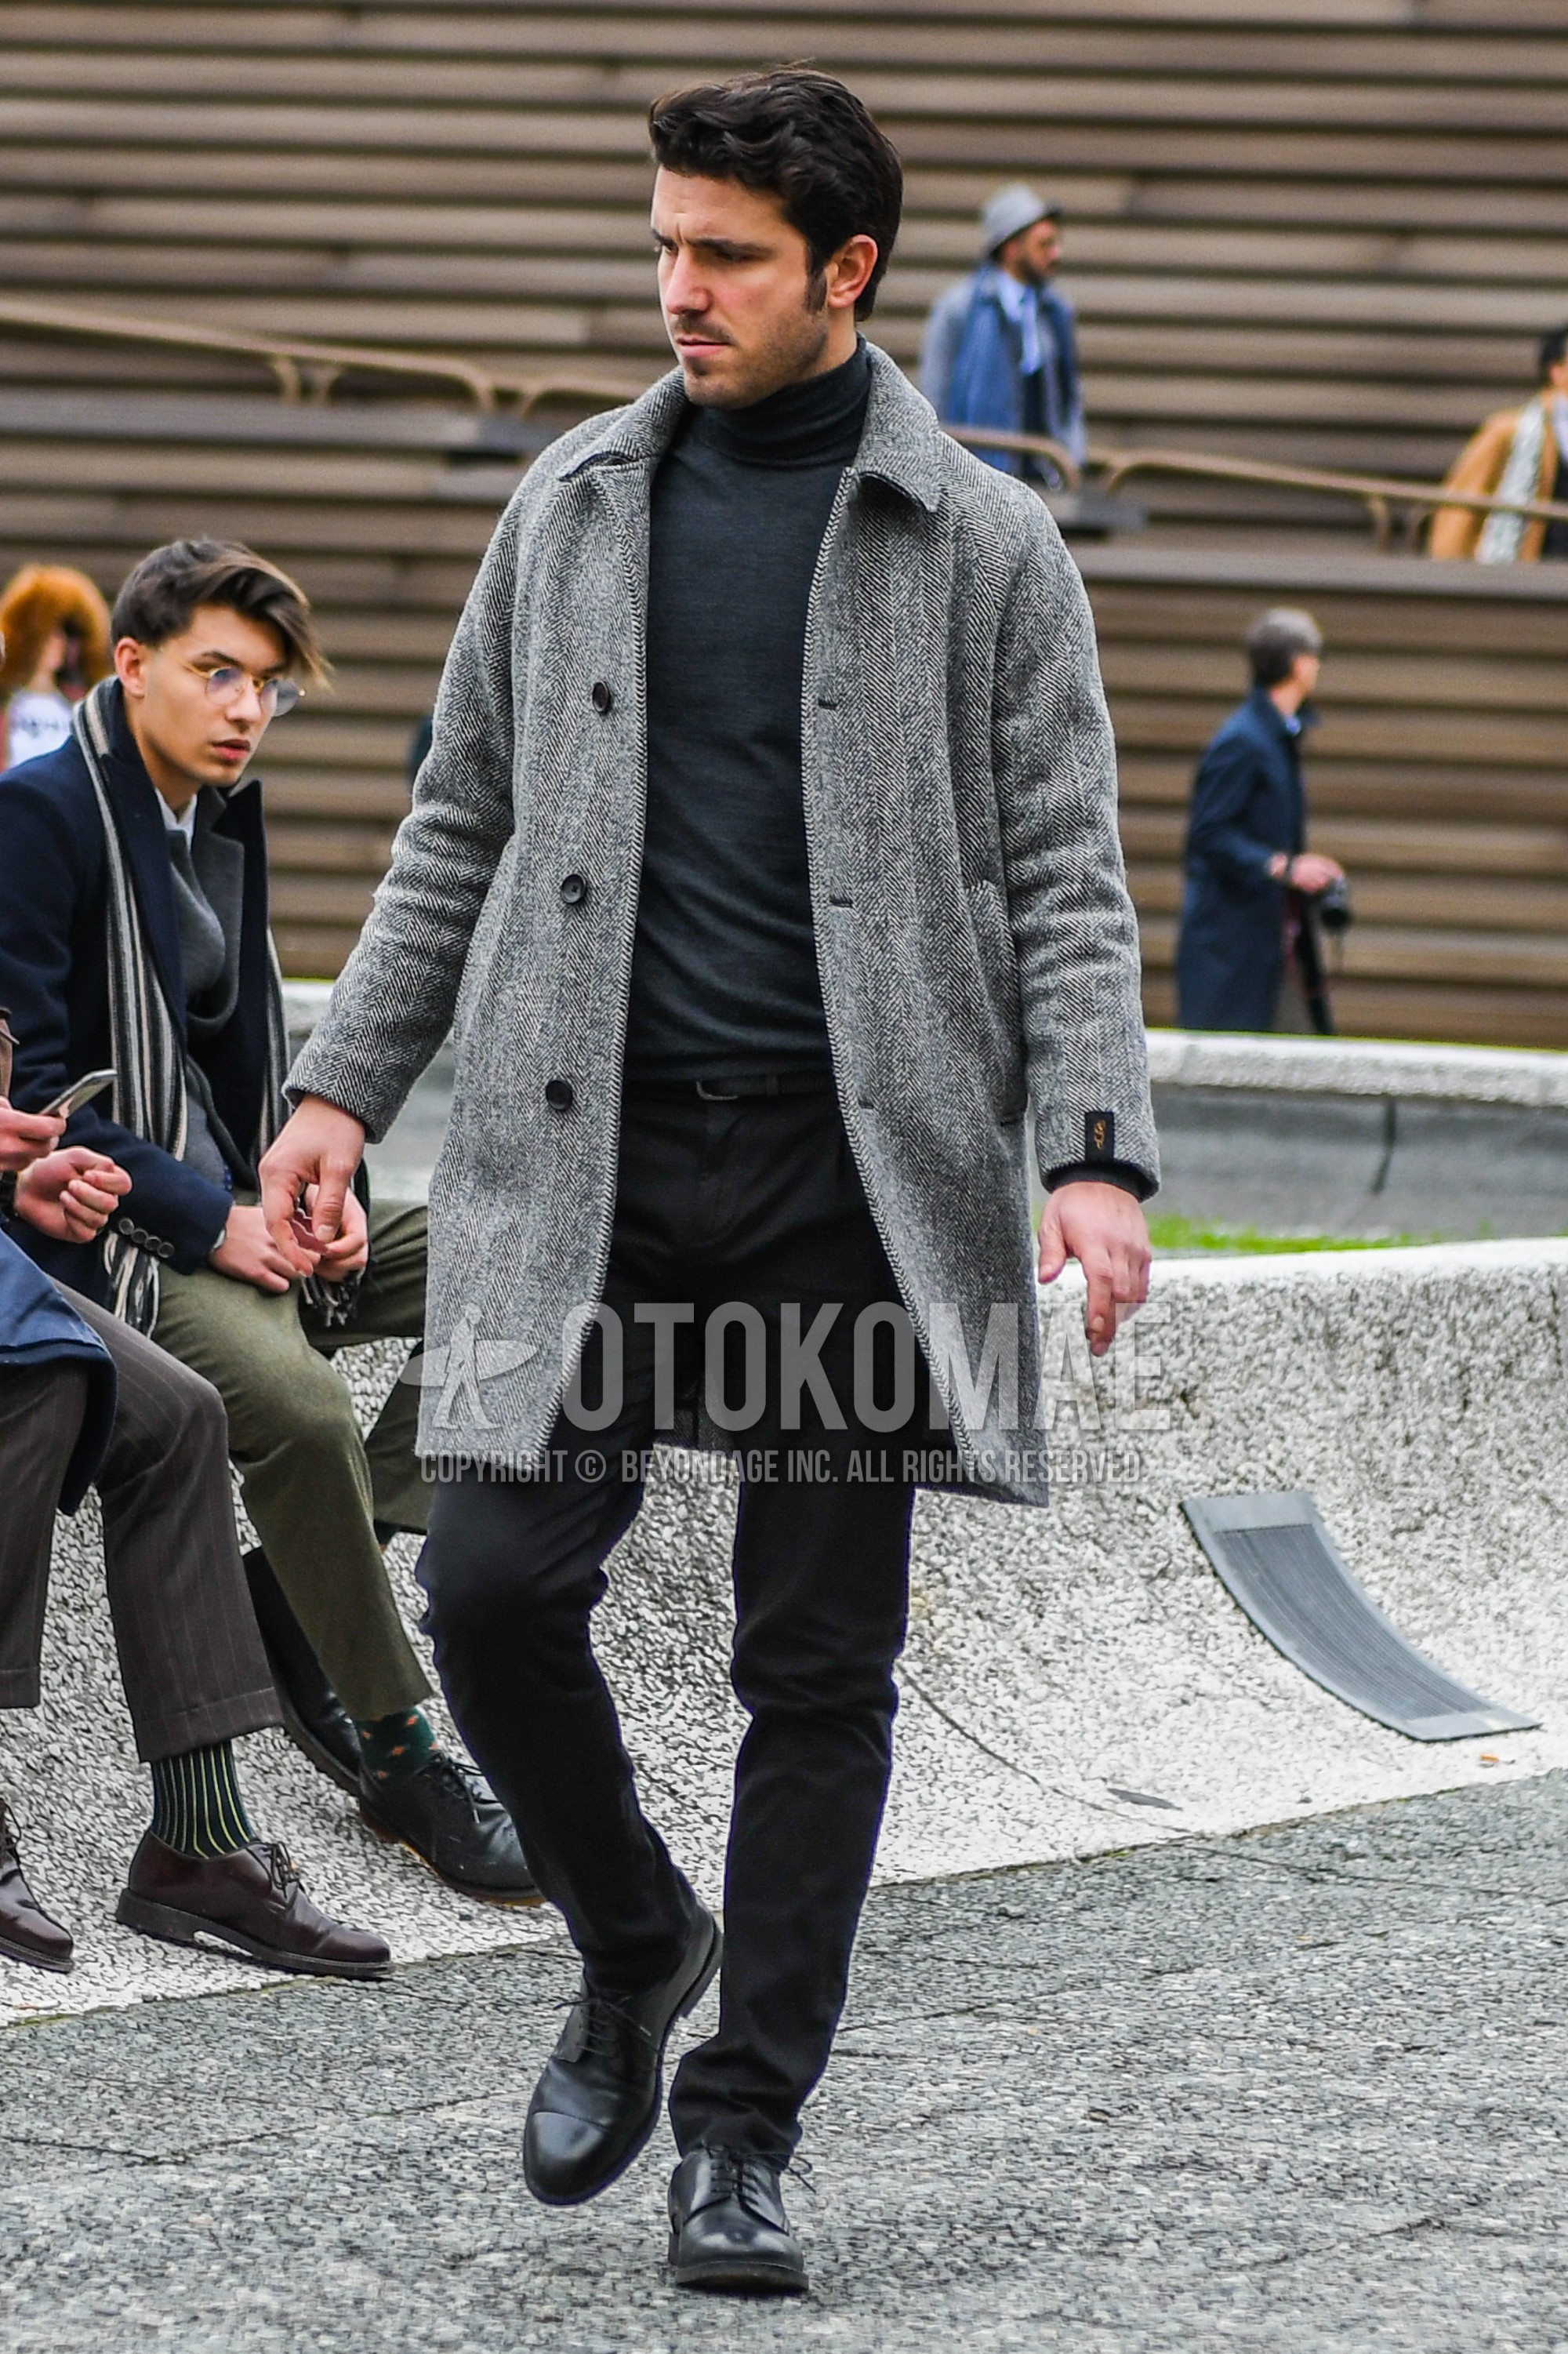 Men's autumn winter outfit with gray plain stenkarrer coat, gray plain turtleneck knit, black plain leather belt, gray plain slacks, black straight-tip shoes leather shoes.